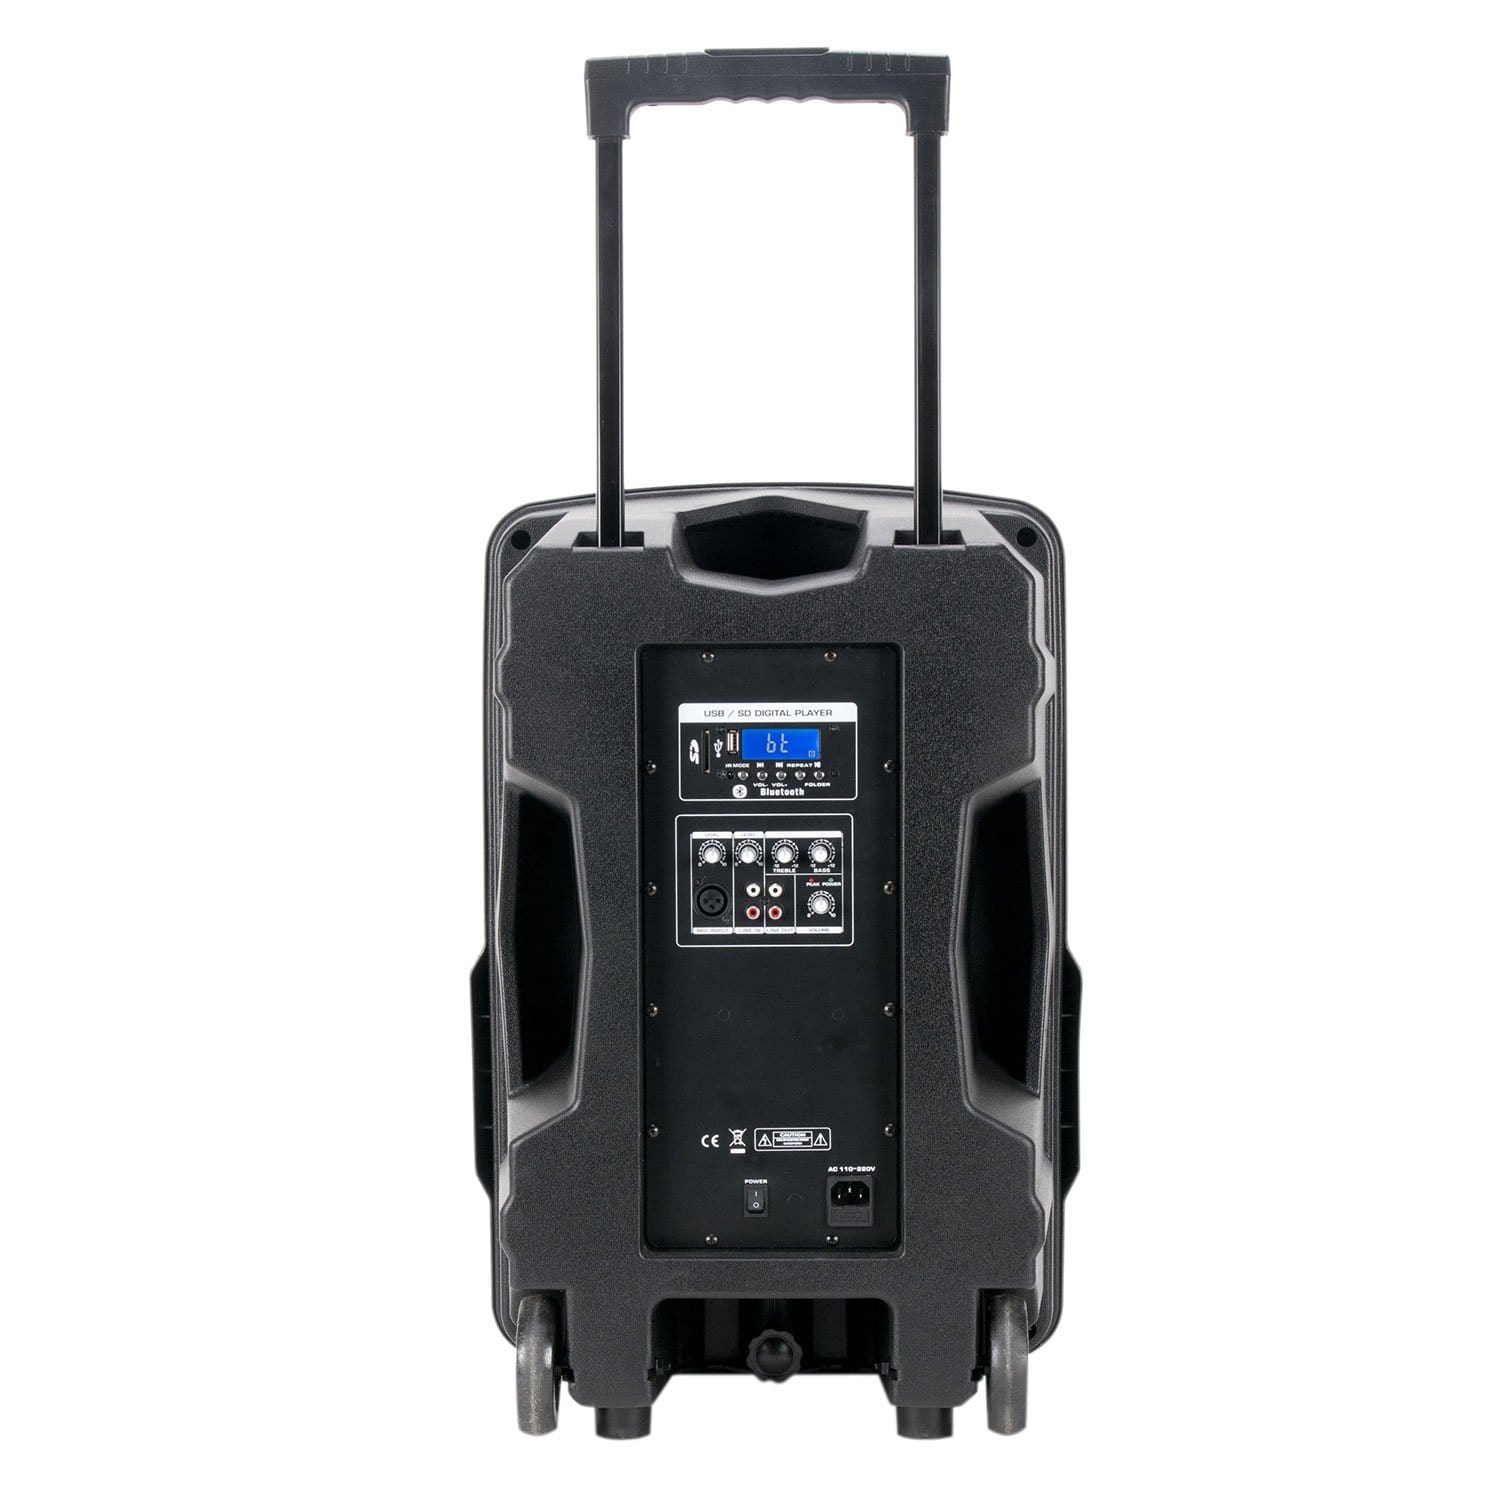 American Audio LTX15BT 15-Inch Portable Powered Speaker - PSSL ProSound and Stage Lighting